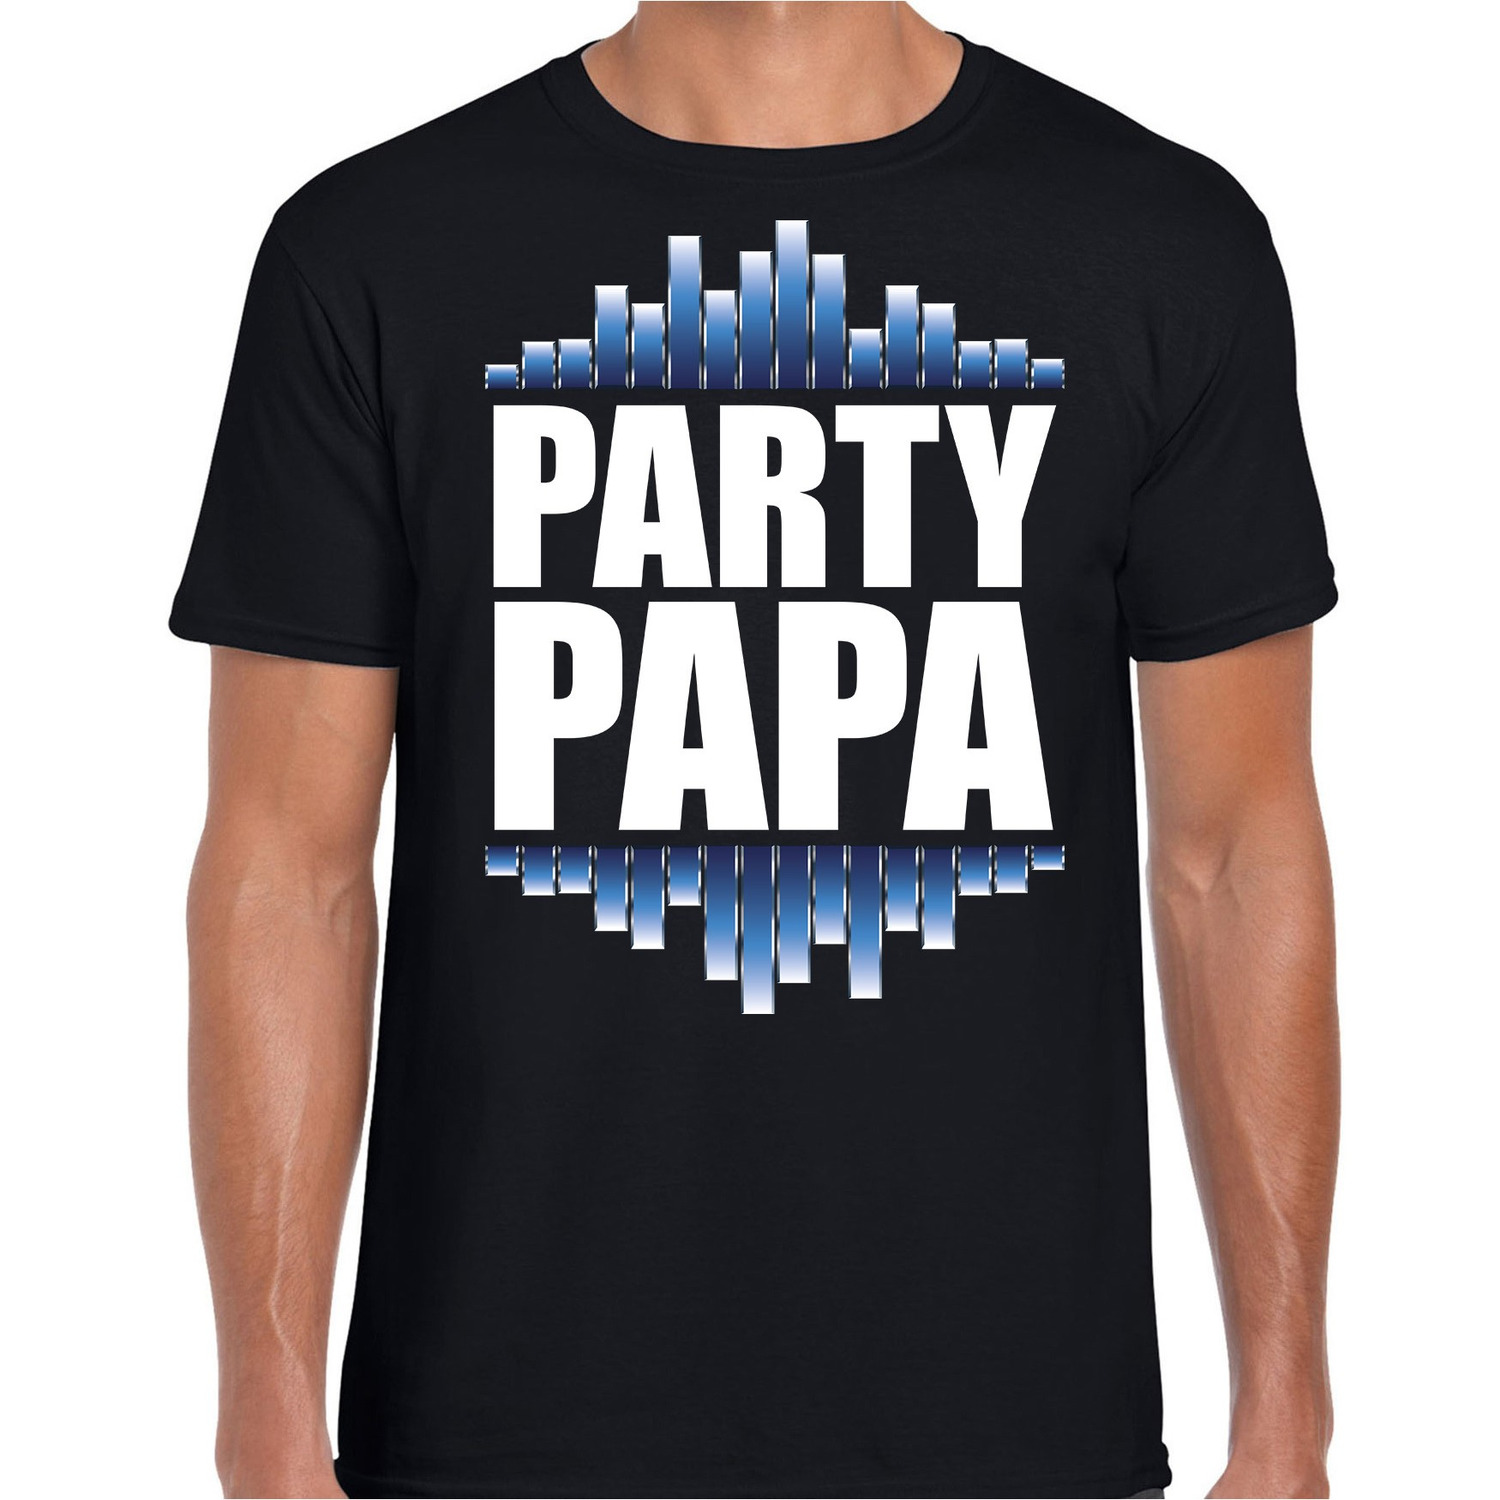 Party papa fun tekst t-shirt zwart heren